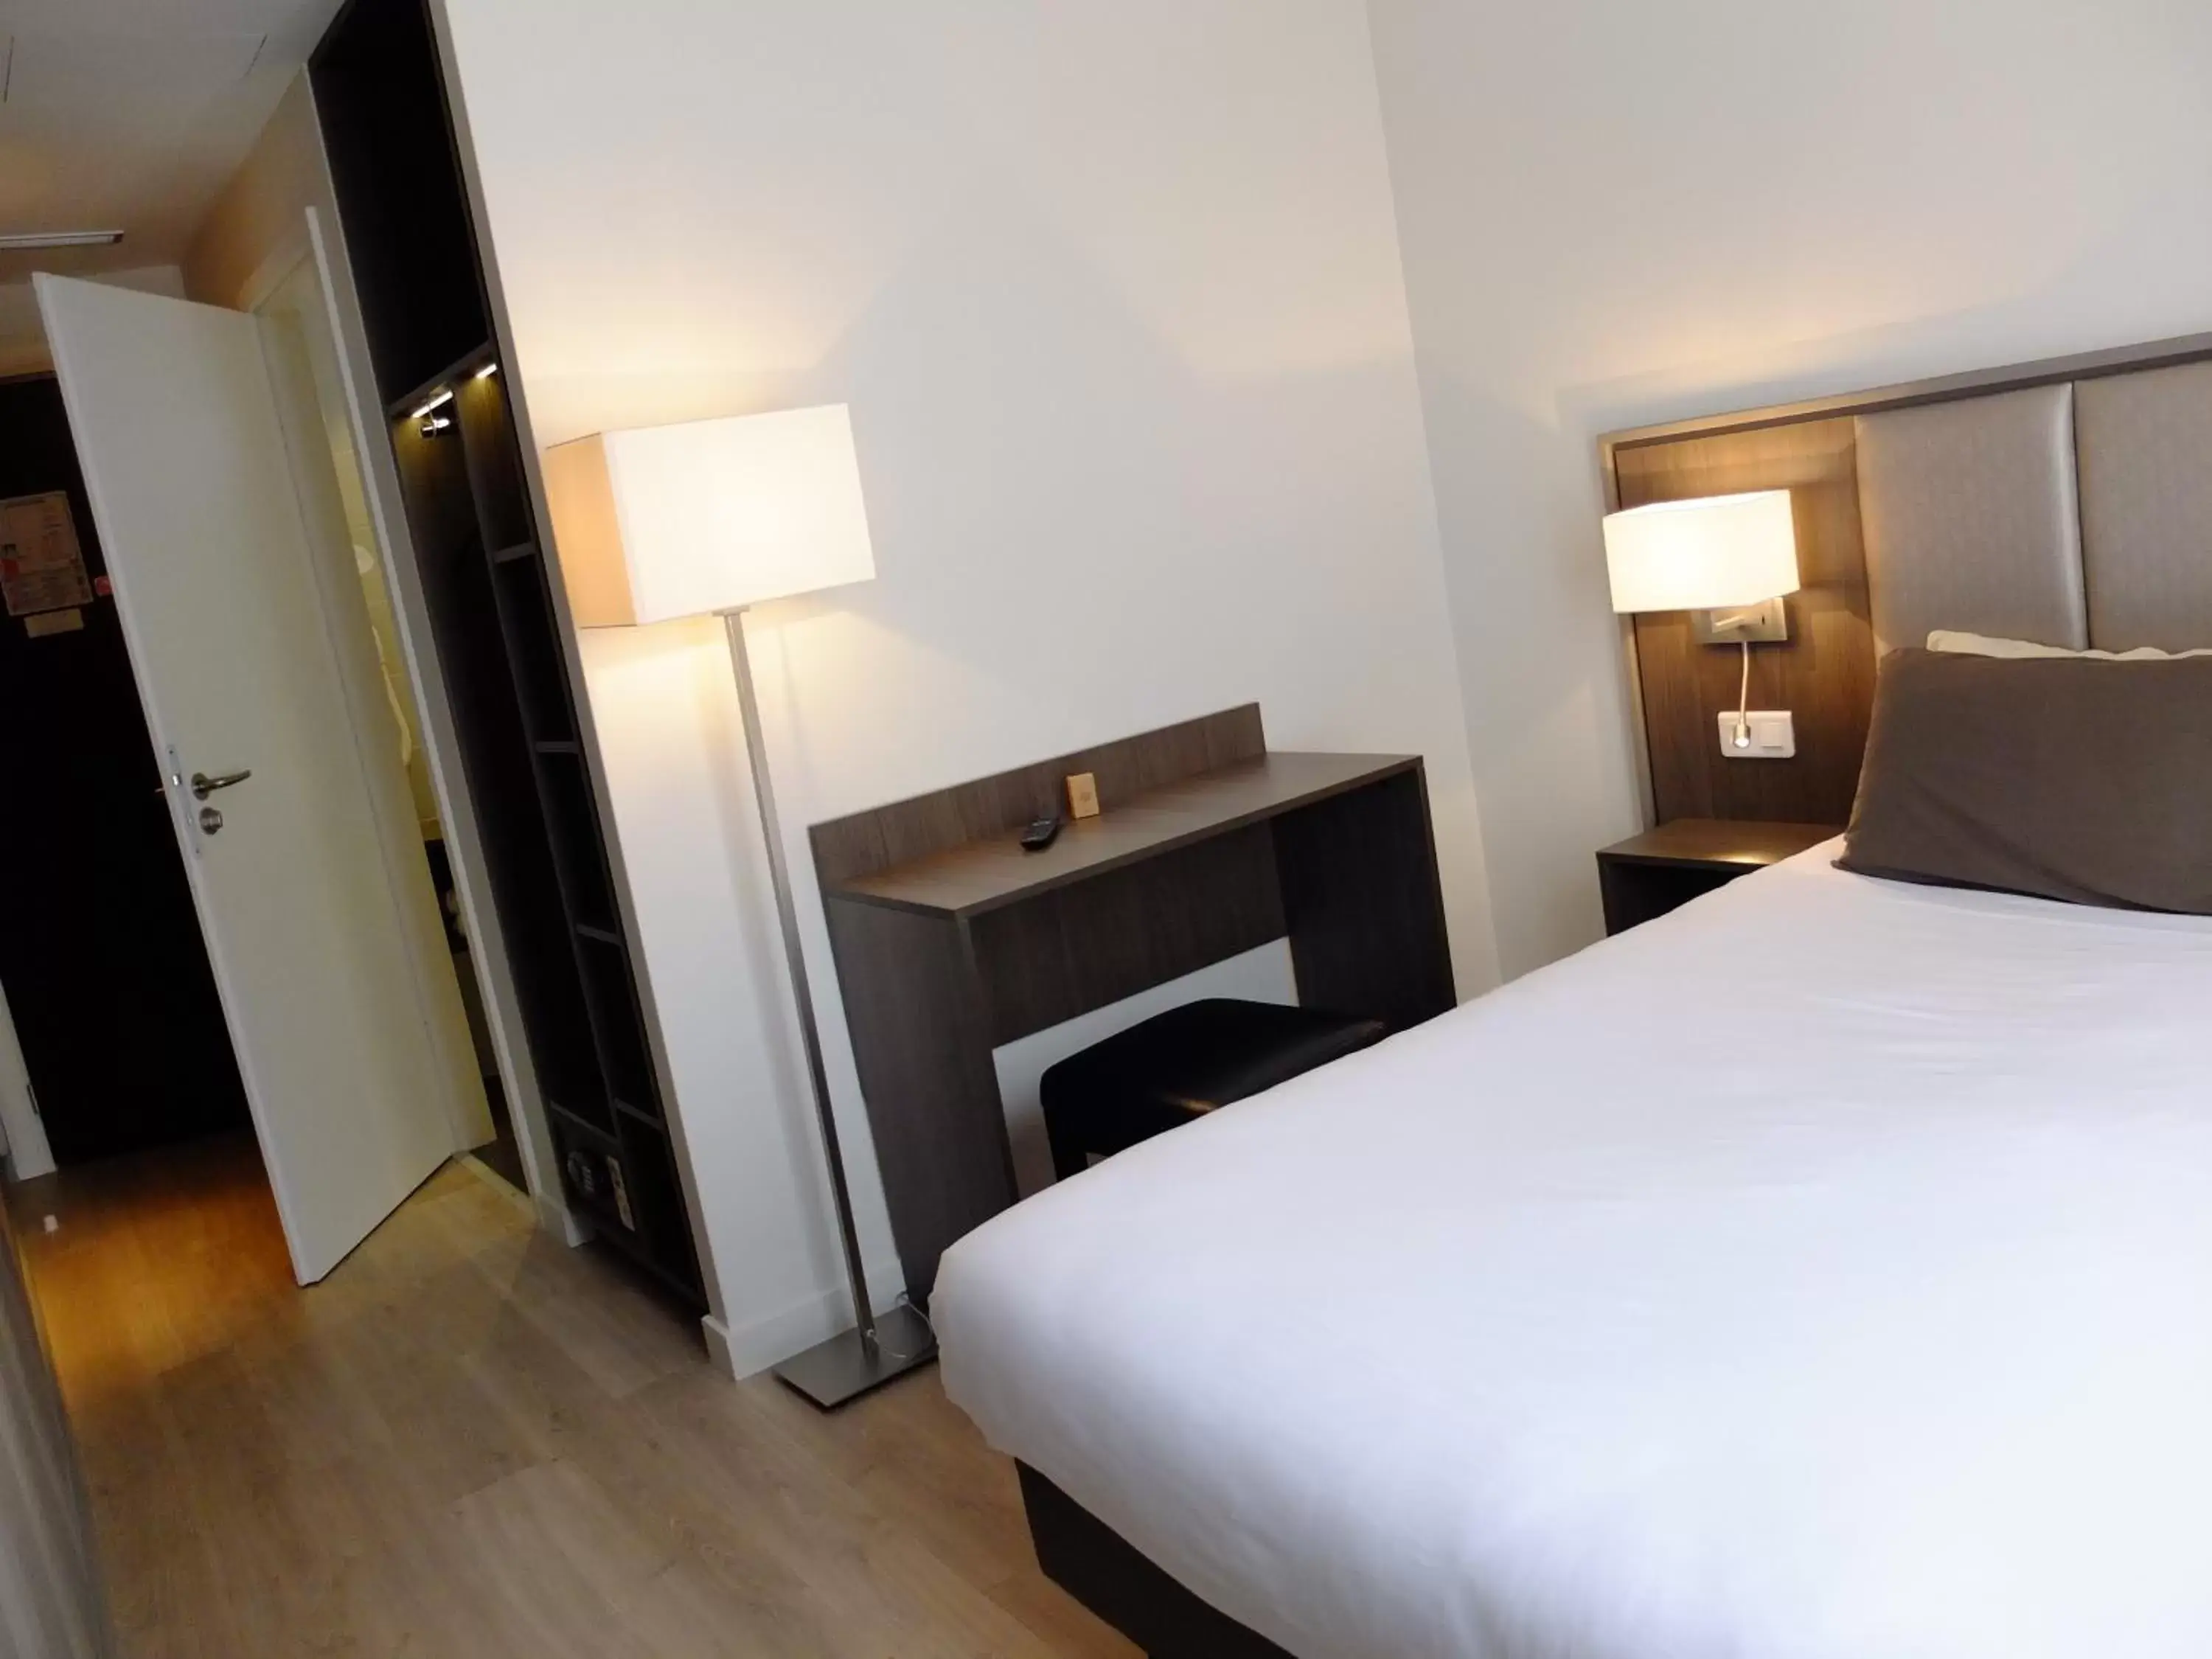 Bed, Room Photo in Hotel de Flore